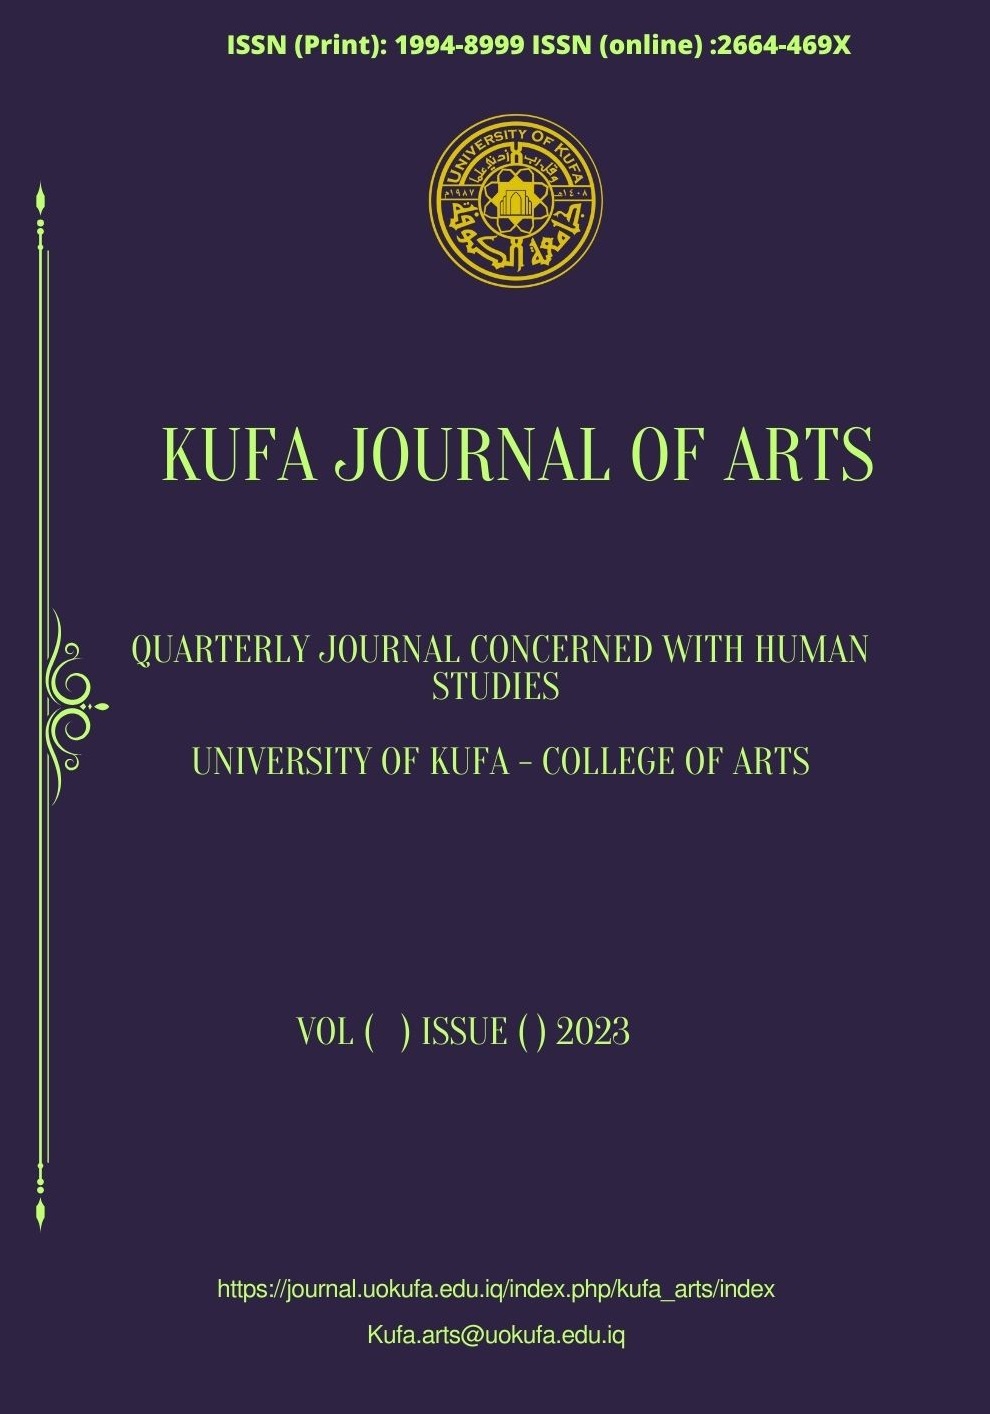  Kufa Journal of Arts